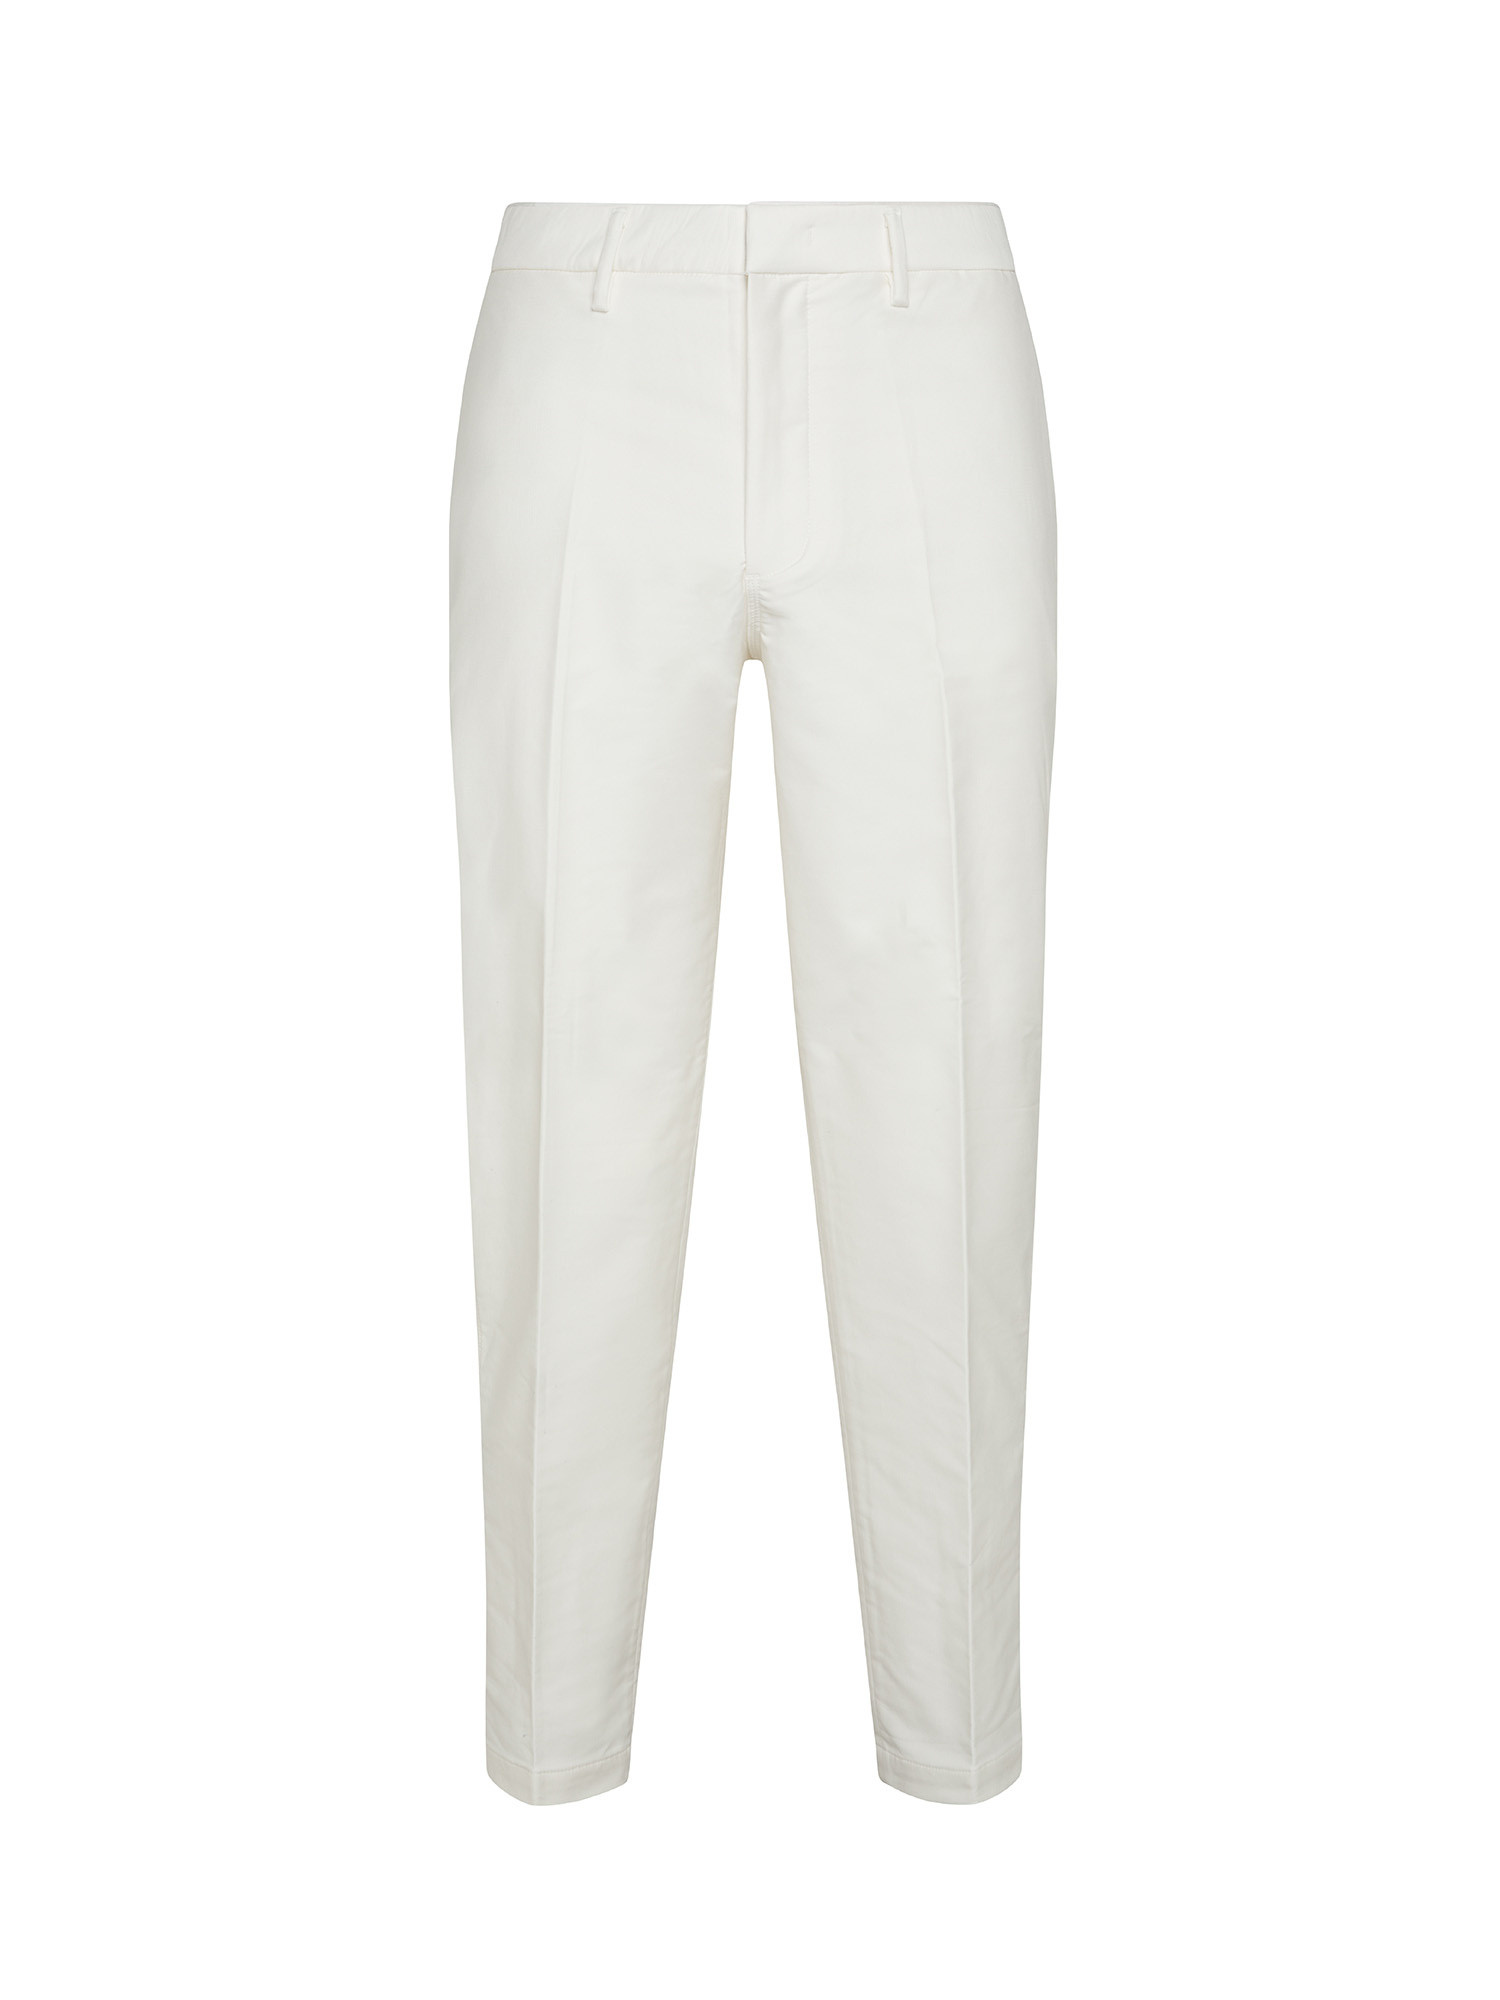 Emporio Armani - Pantaloni chino, Bianco, large image number 0